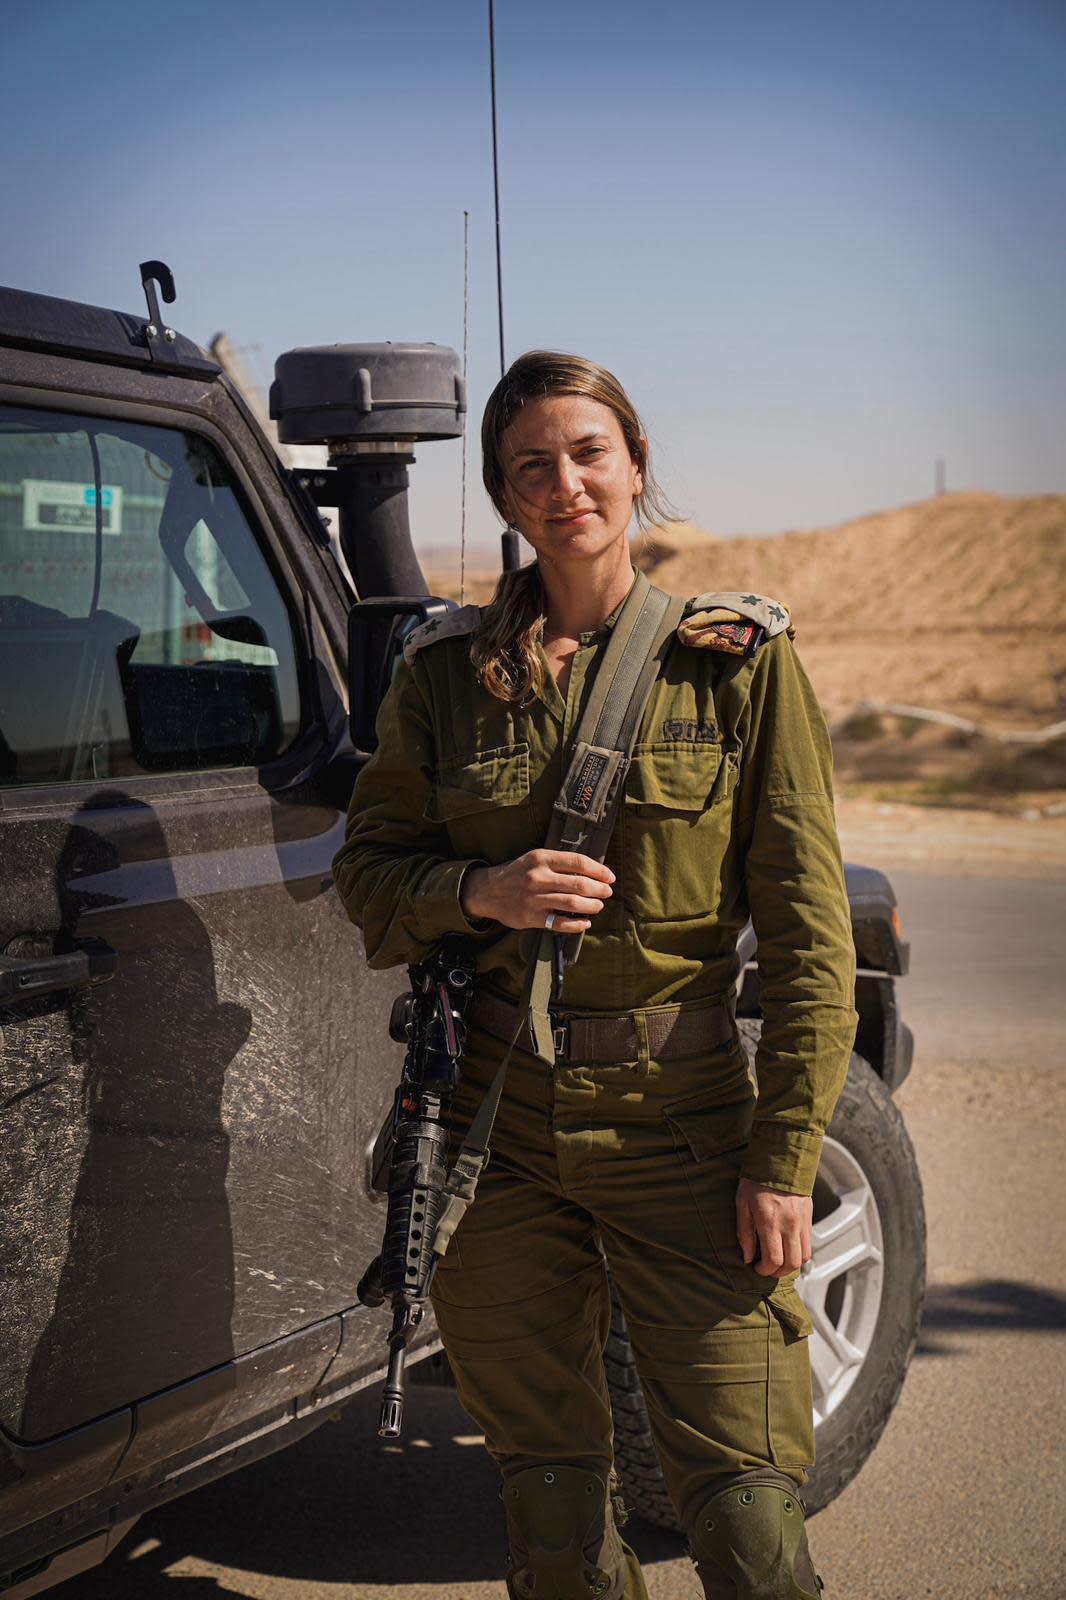  Lt. Col. Or Ben Yehuda (credit: IDF SPOKESPERSON'S UNIT)